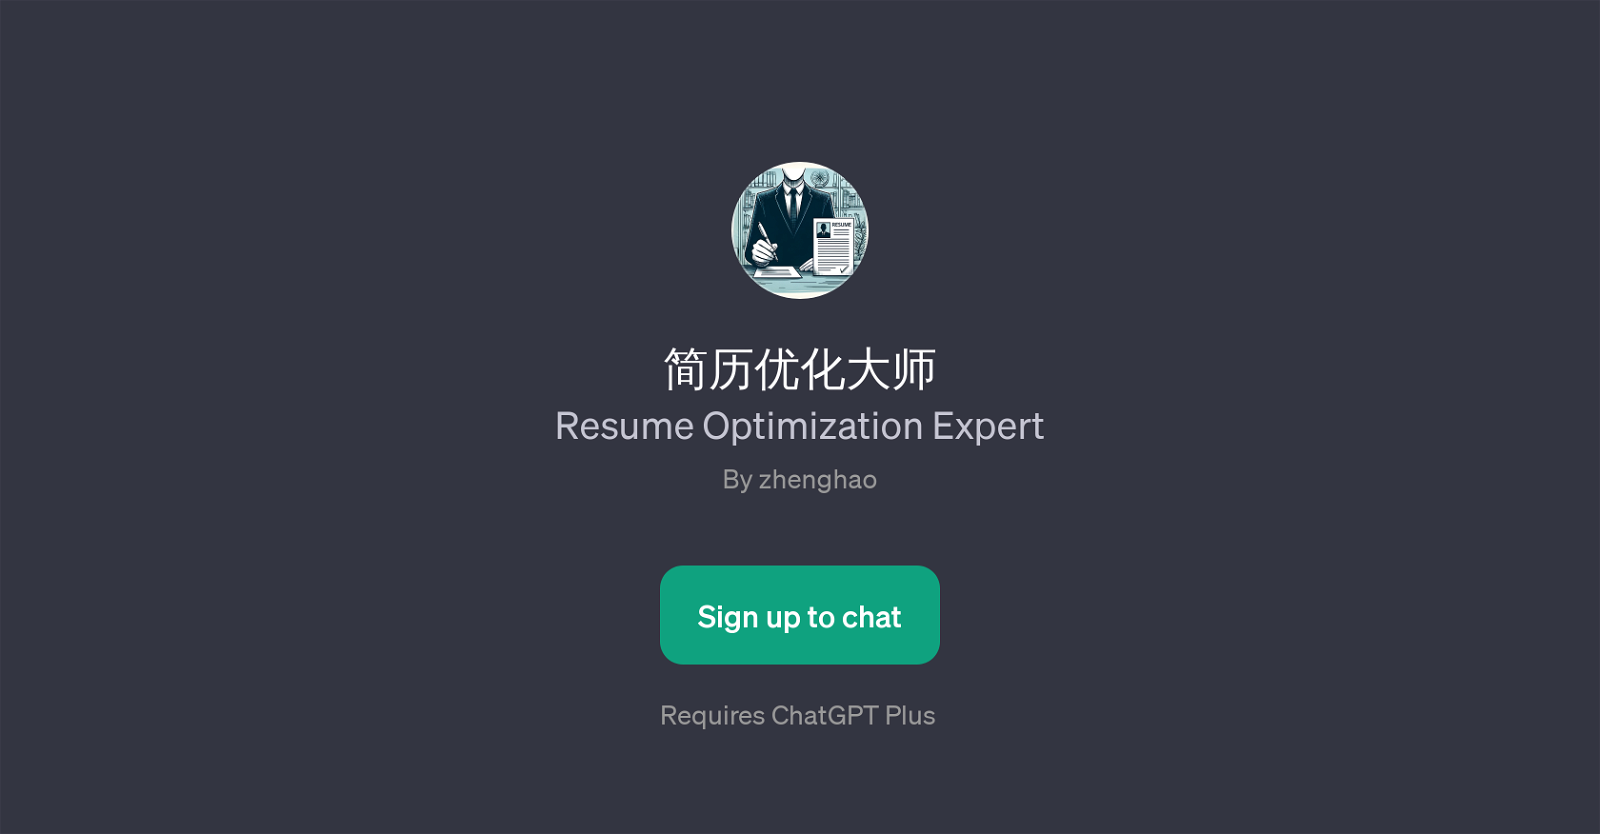 (Resume Optimization Expert) website